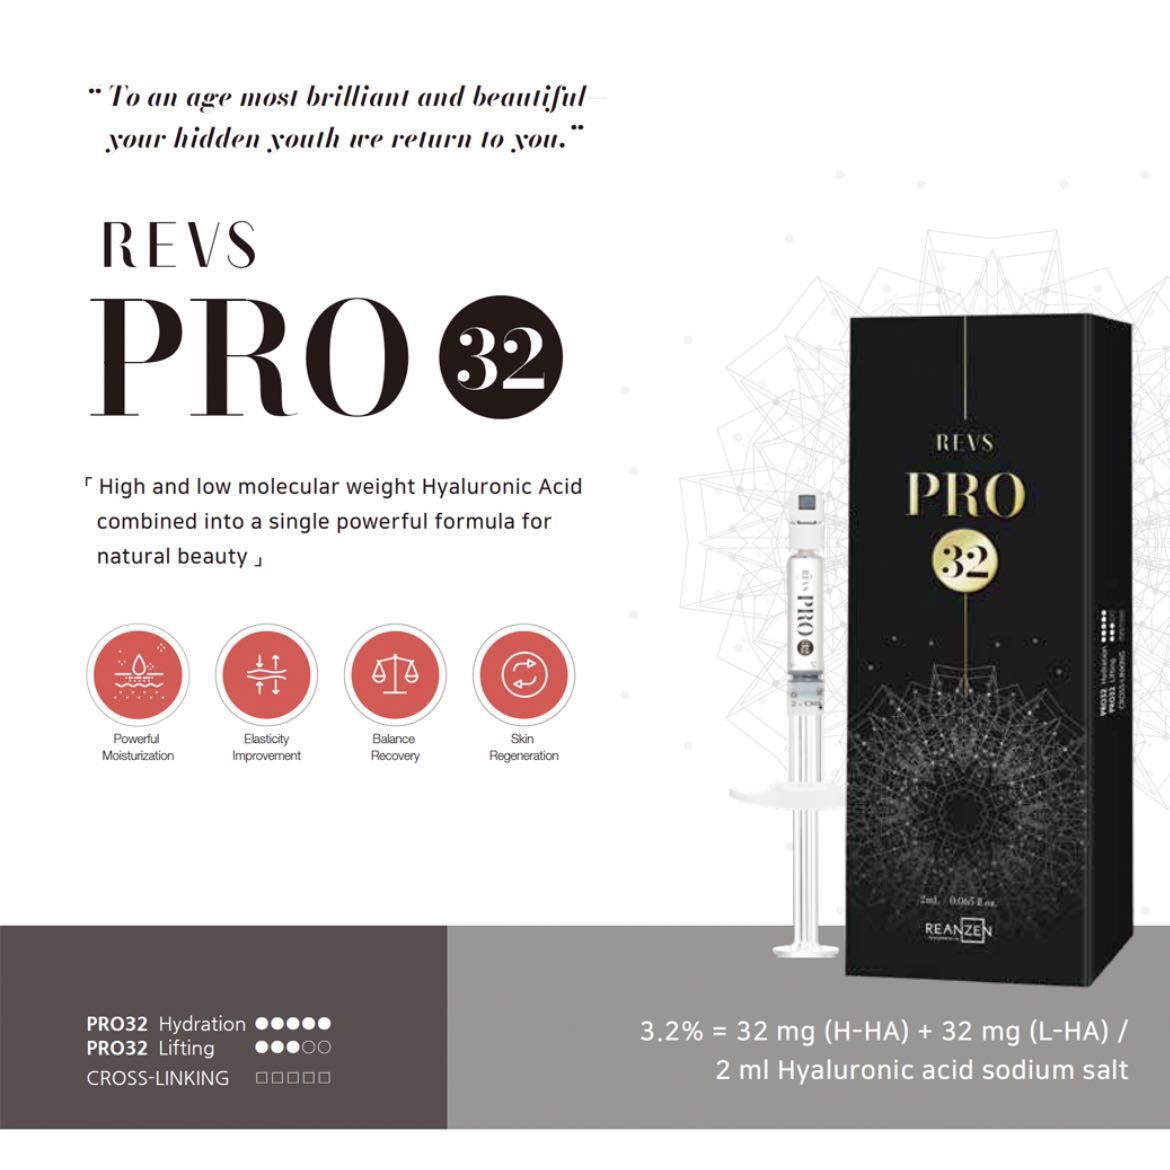 Rev PRO 32 Skin booster 2 treatments portfolio